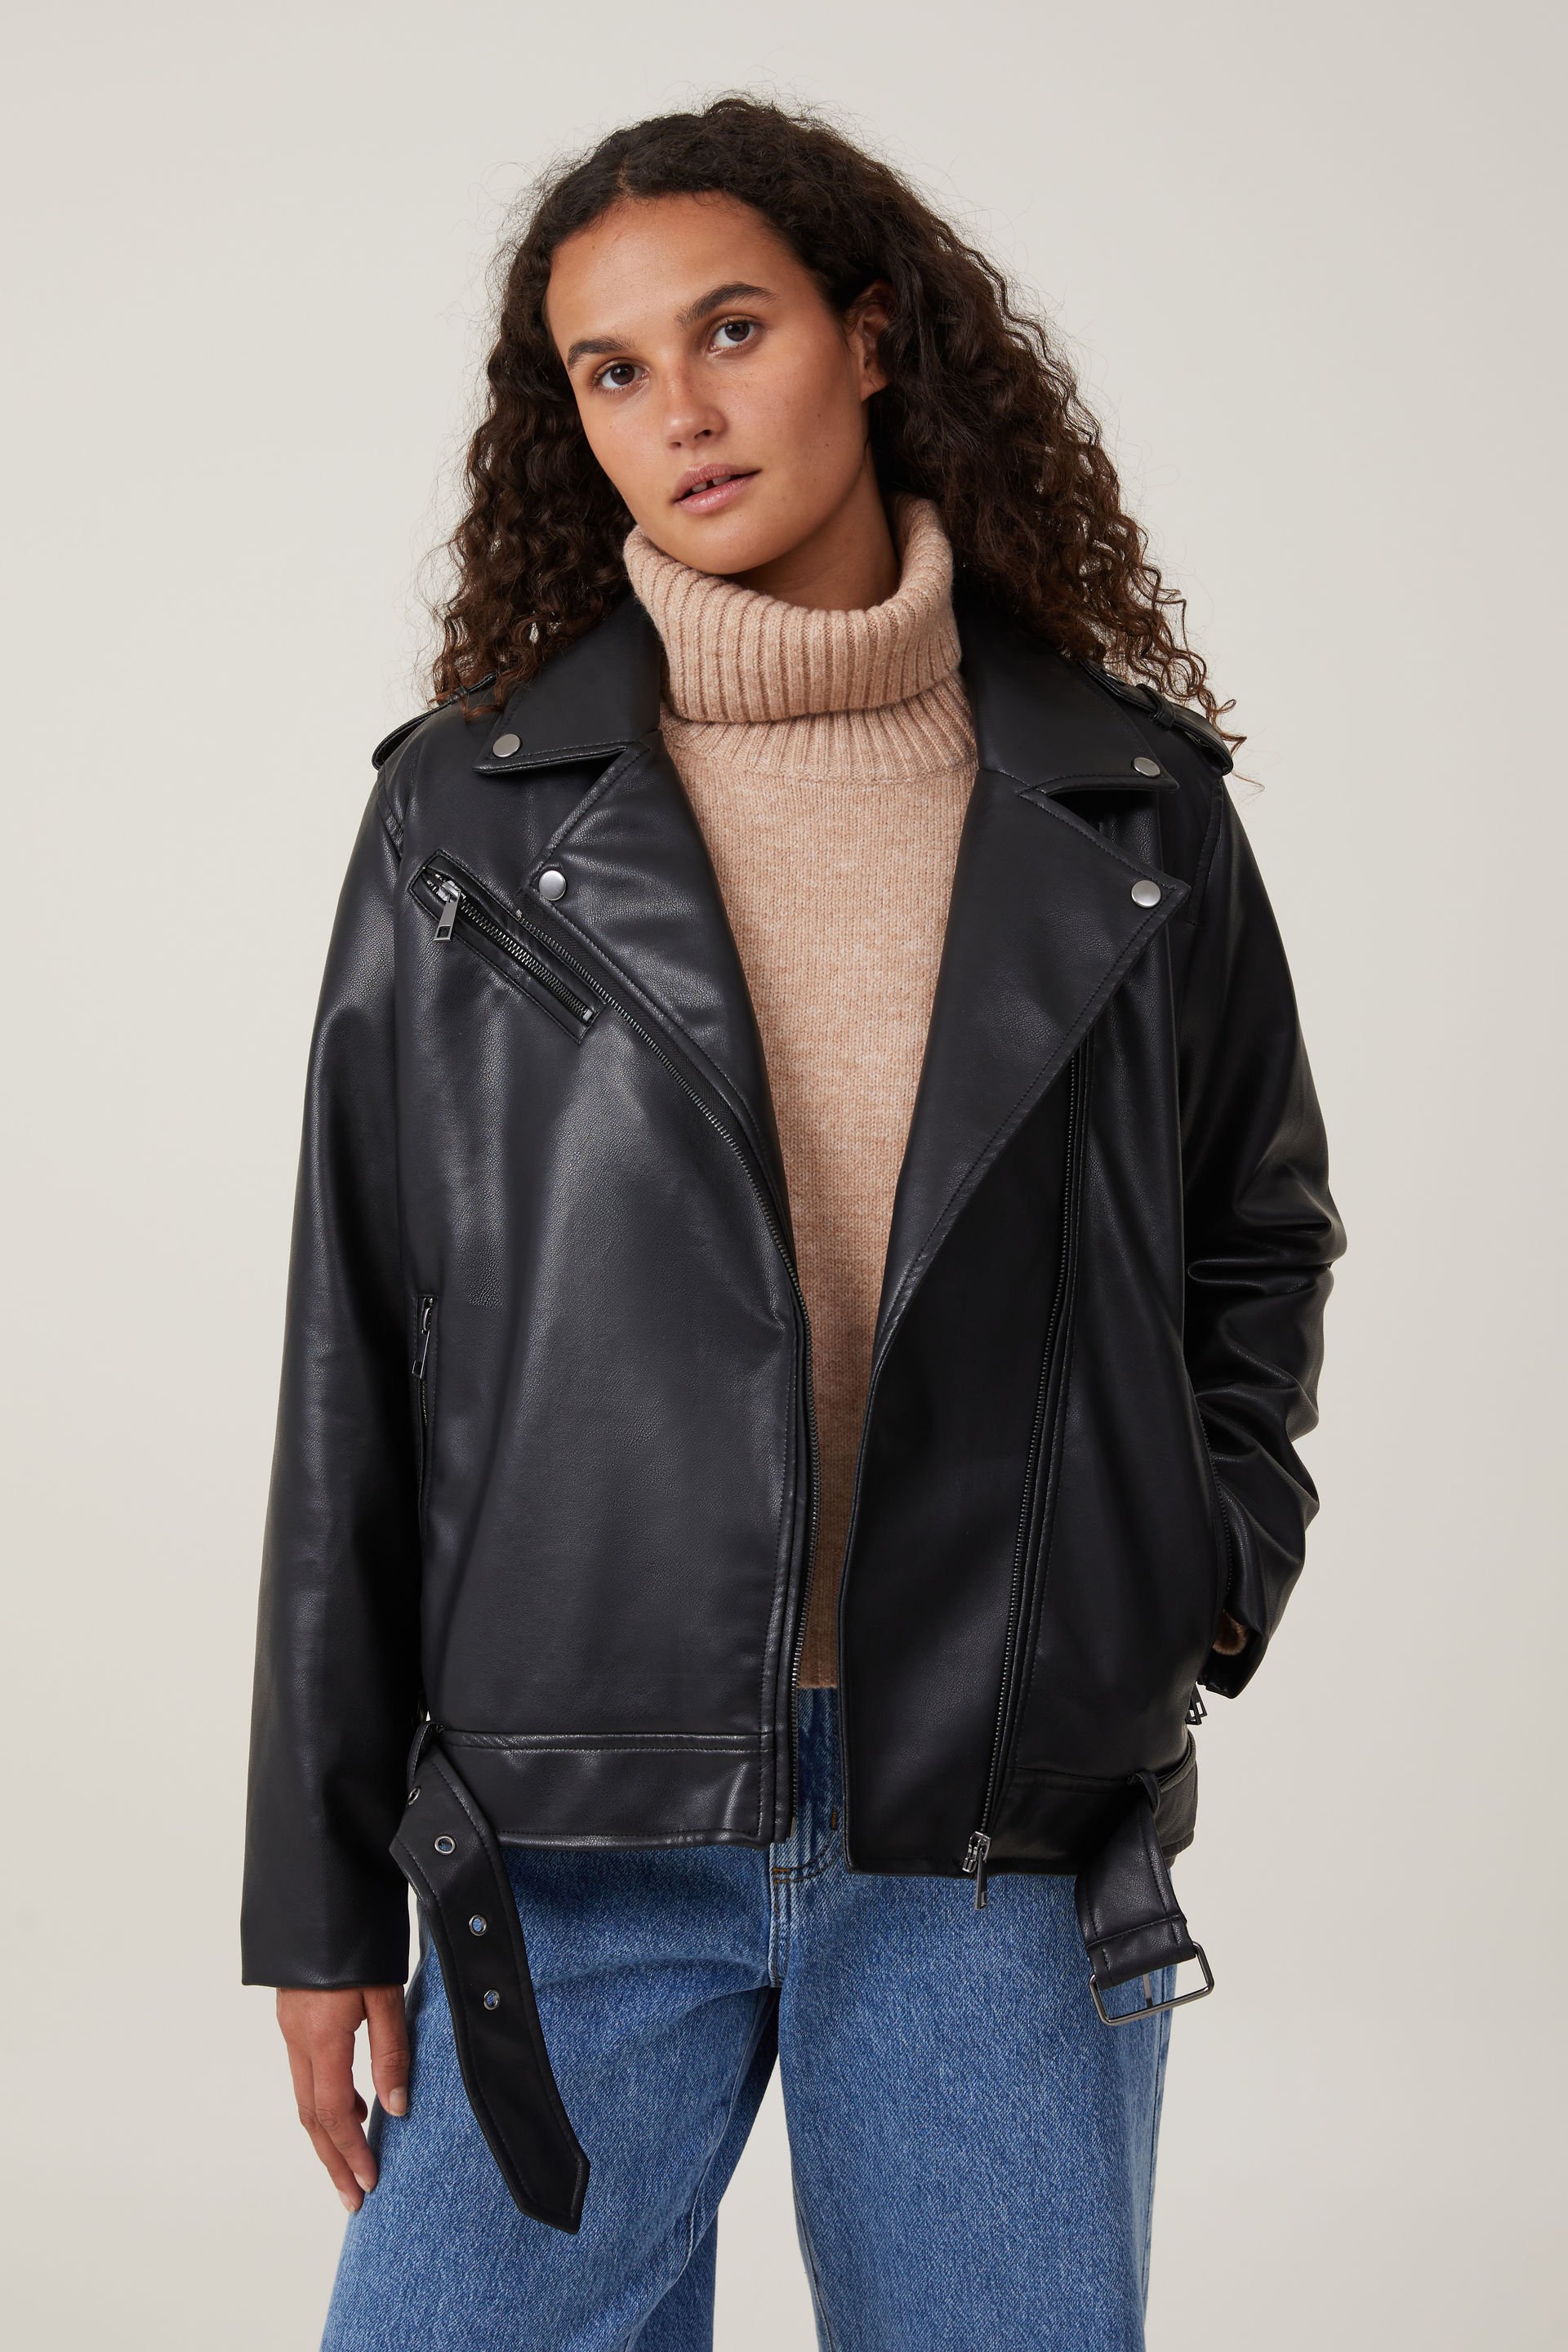 Cotton On Women - Faux Leather Biker Jacket - Black